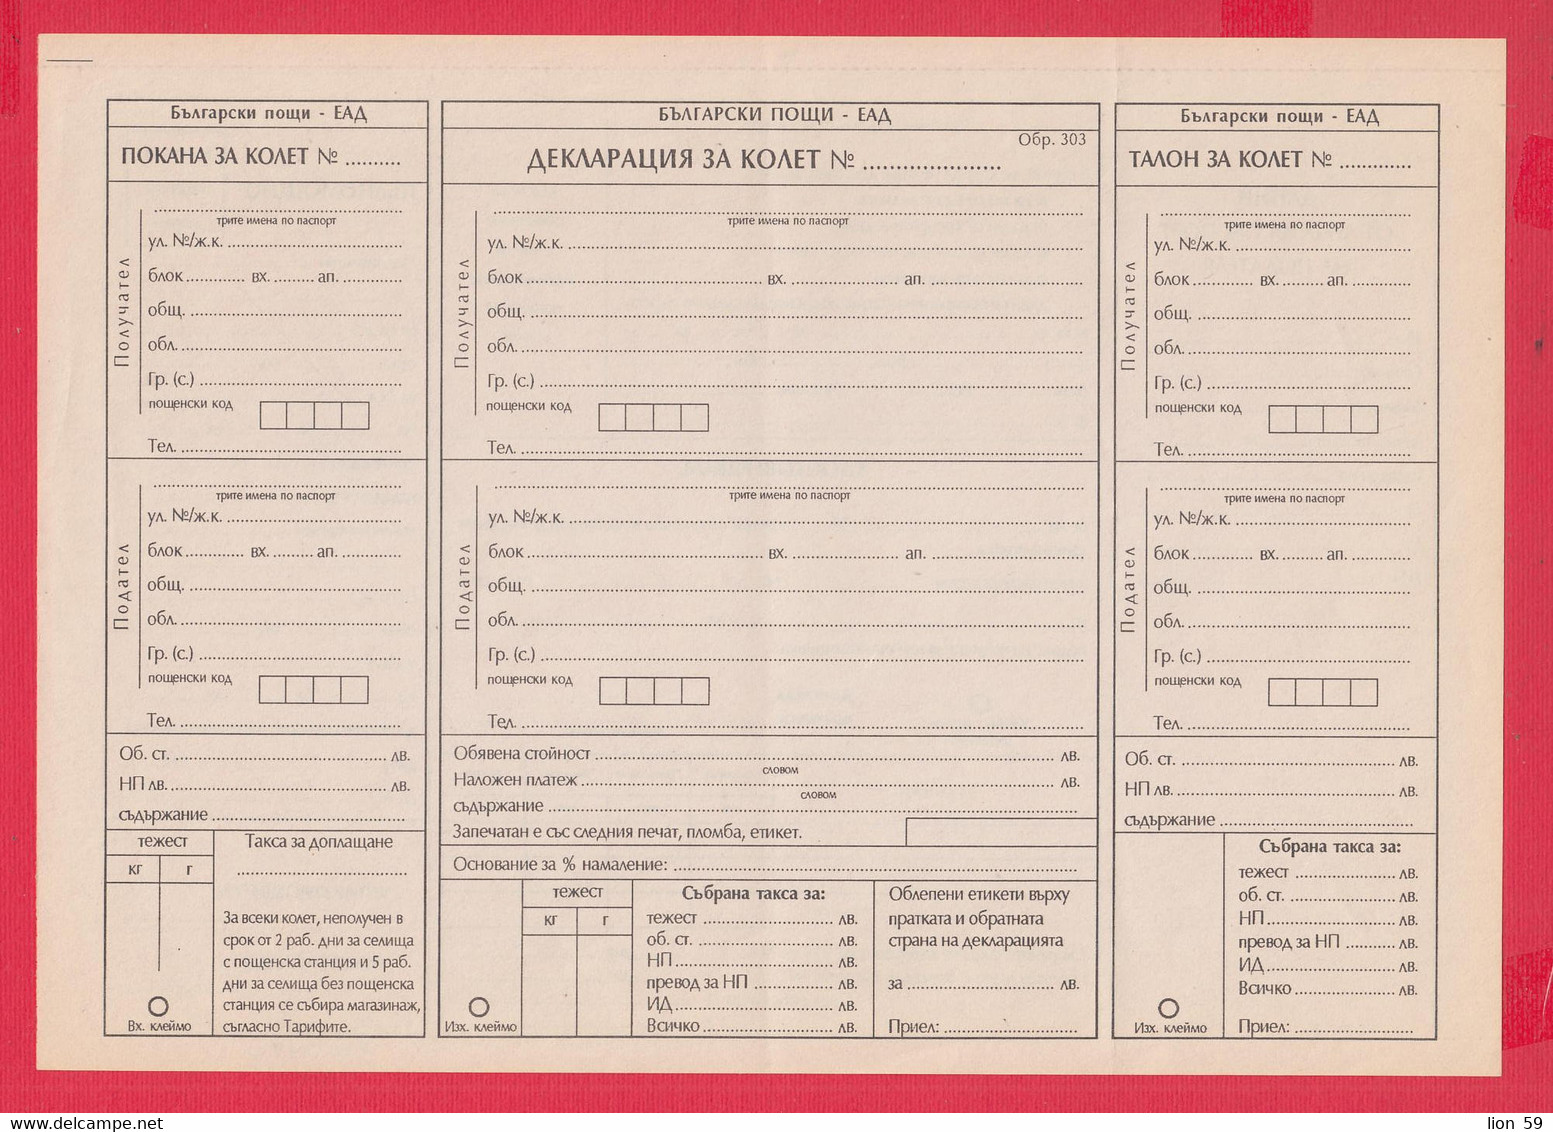 113K50 / Bulgaria 199.. Mint Form 303 - Invitation, Postal Declaration, Parcel Coupon , Bulgarie Bulgarien Bulgarije - Lettres & Documents